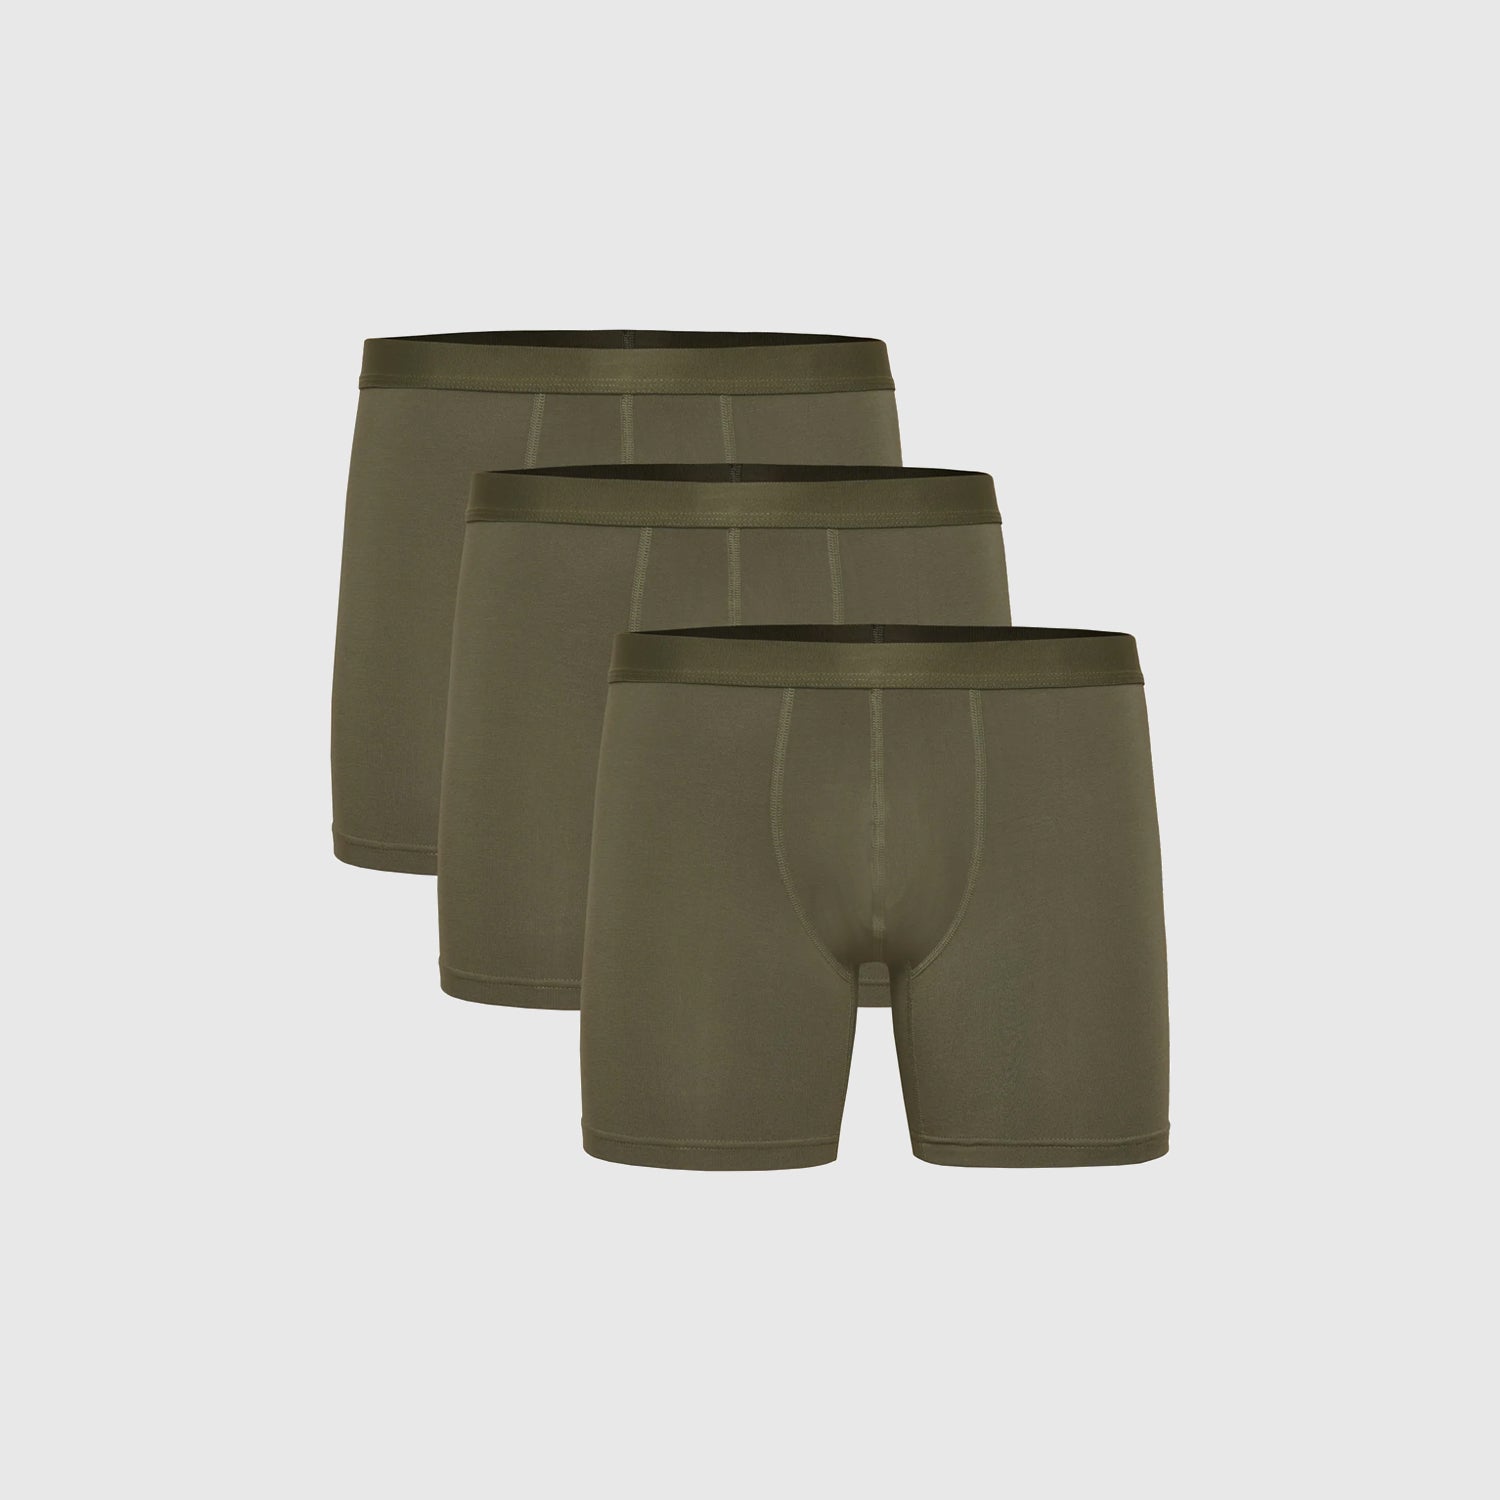 Shop for Top Moss Green Trunks Modern Fit Underwear for Men